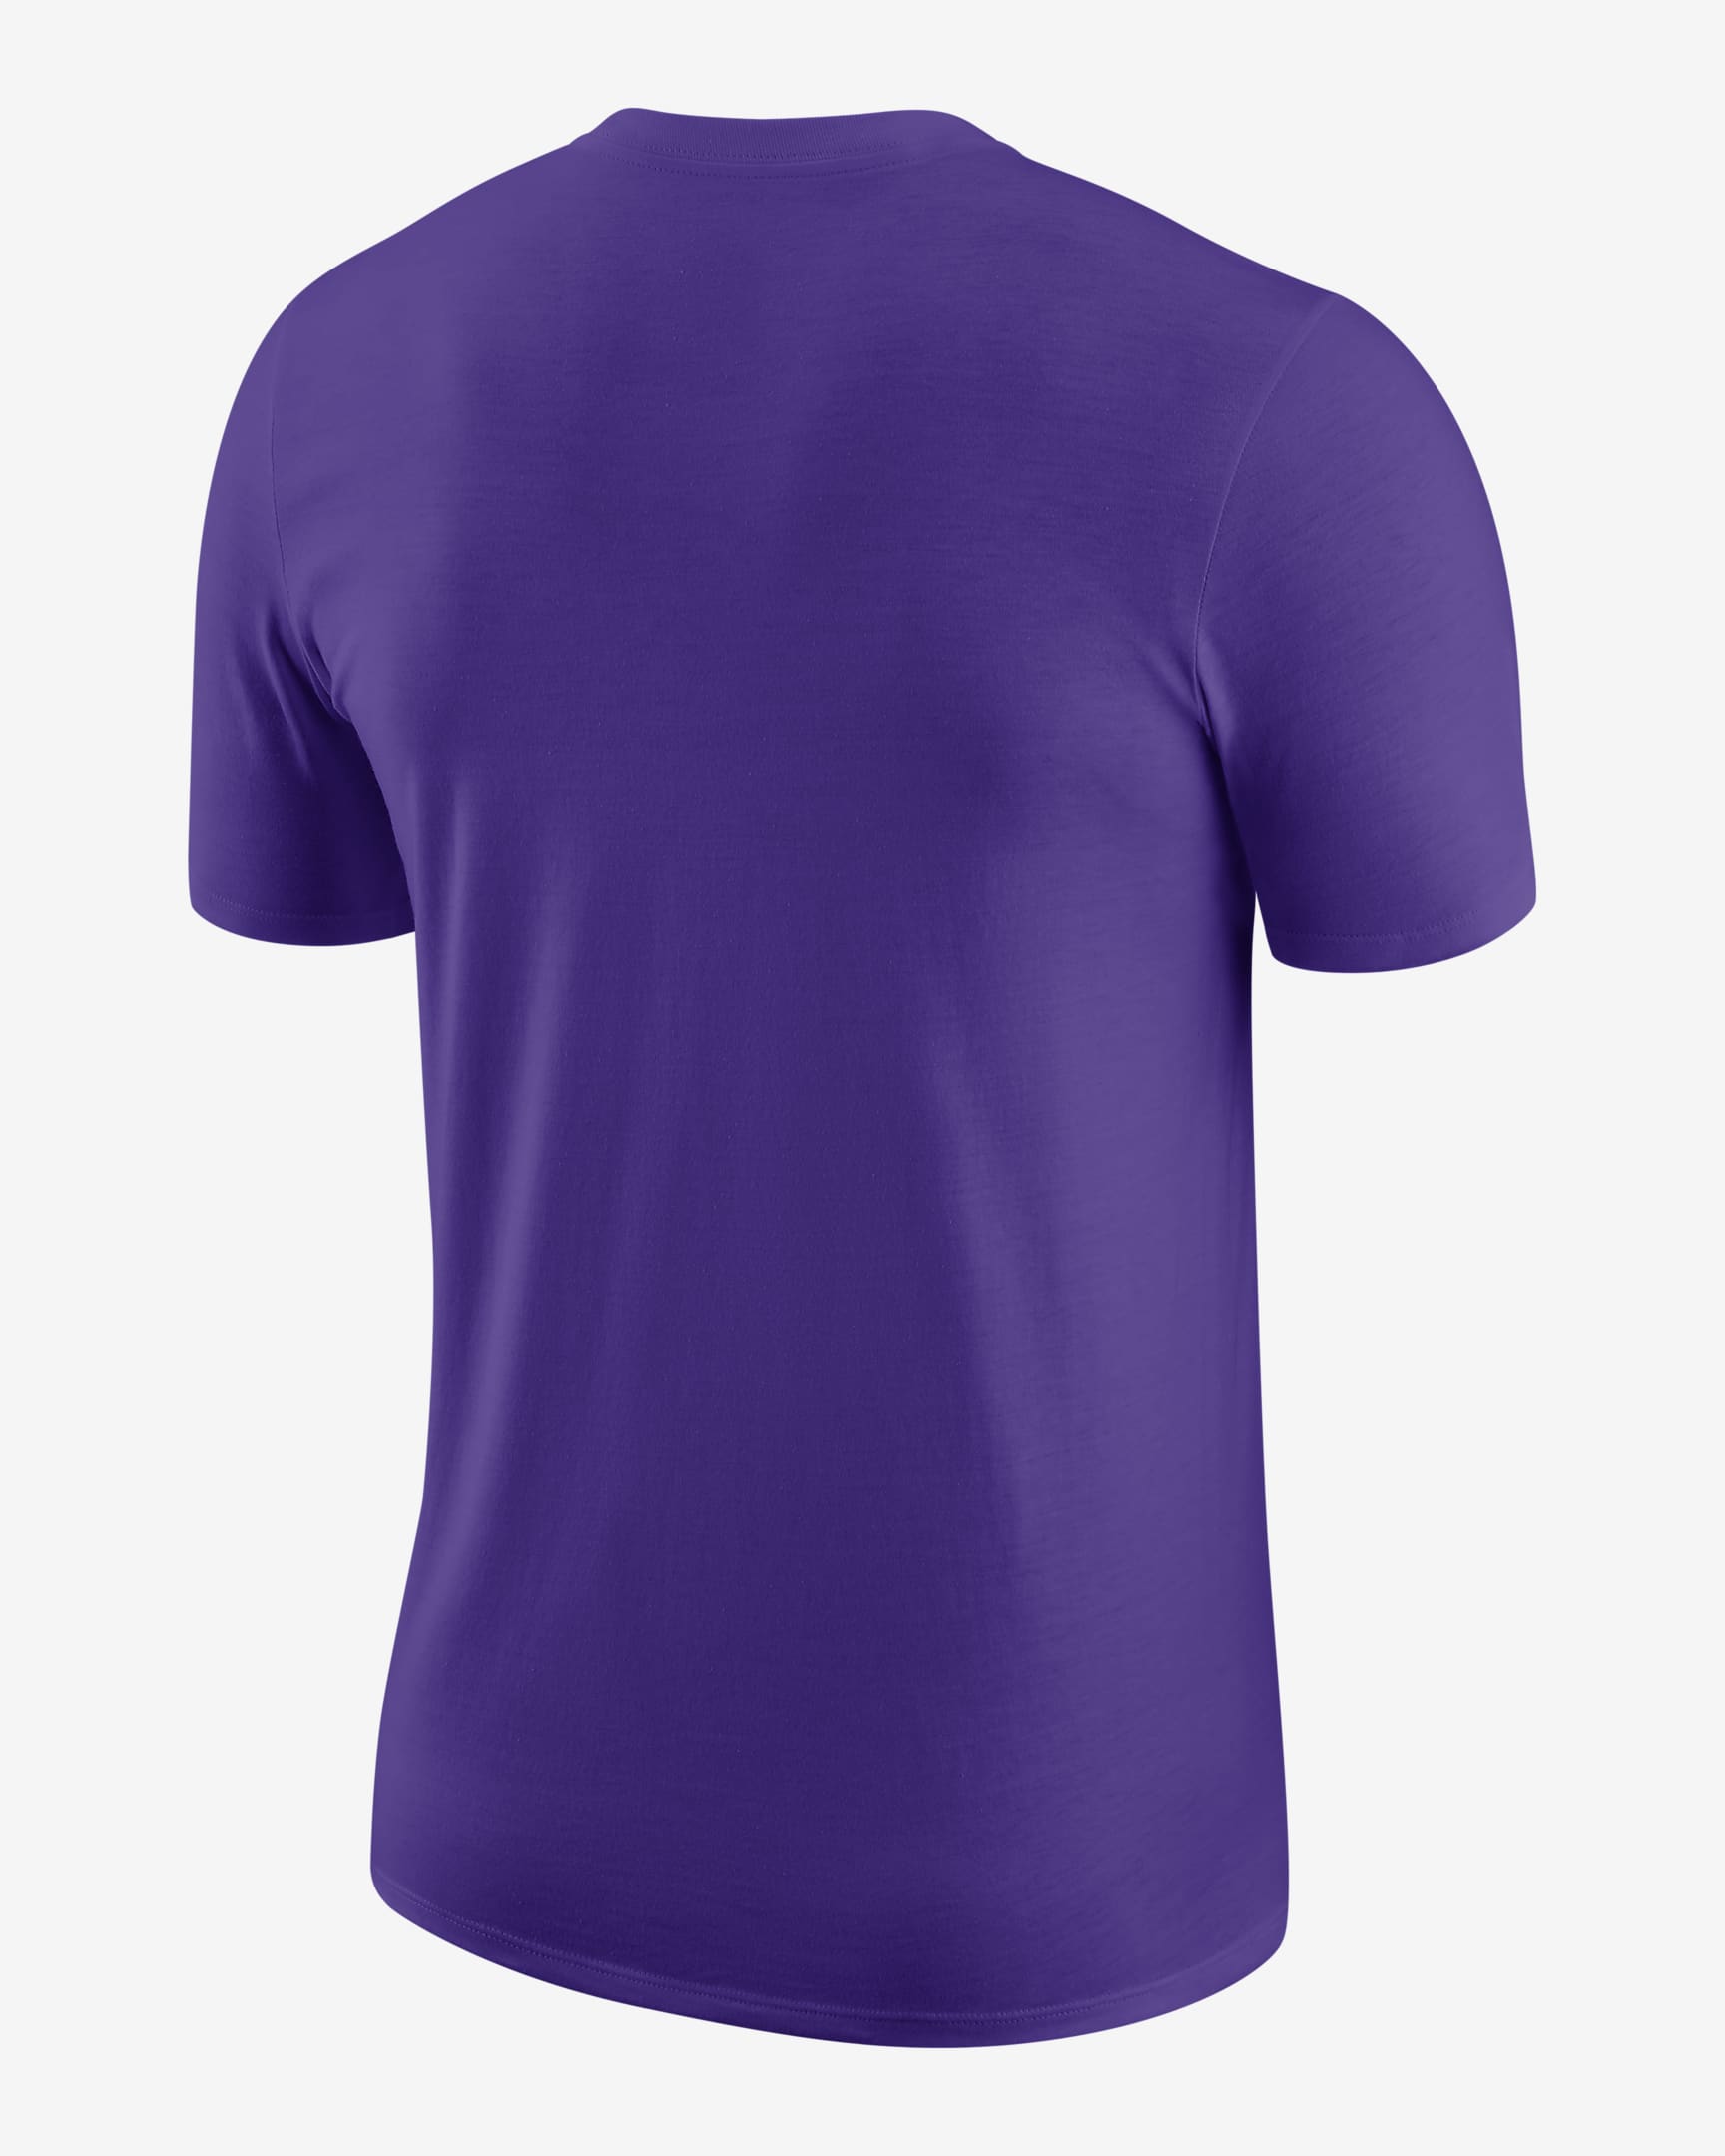 Los Angeles Lakers Essential Men's Nike NBA T-Shirt. Nike CZ